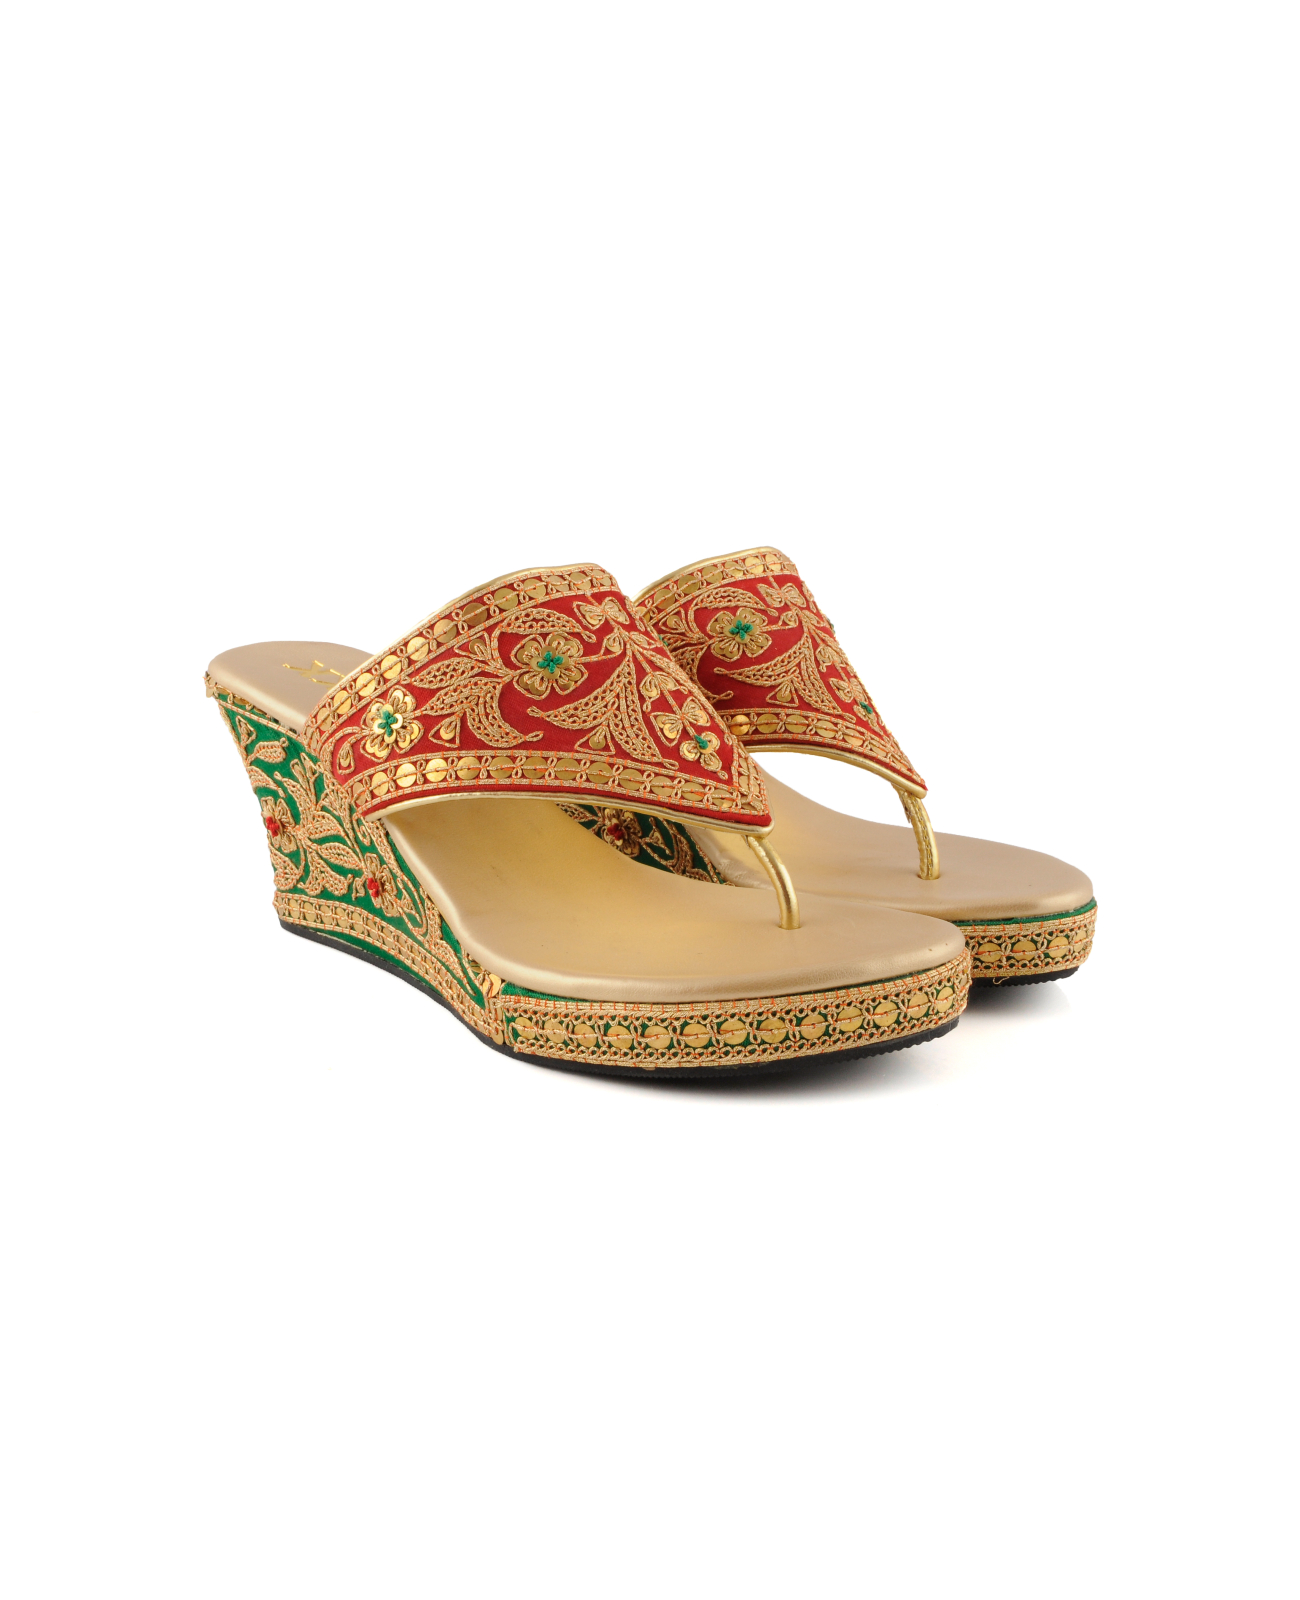 Blinkk Footwear | in Ahmedabad Customize Your Wedding Ethnic Footwear